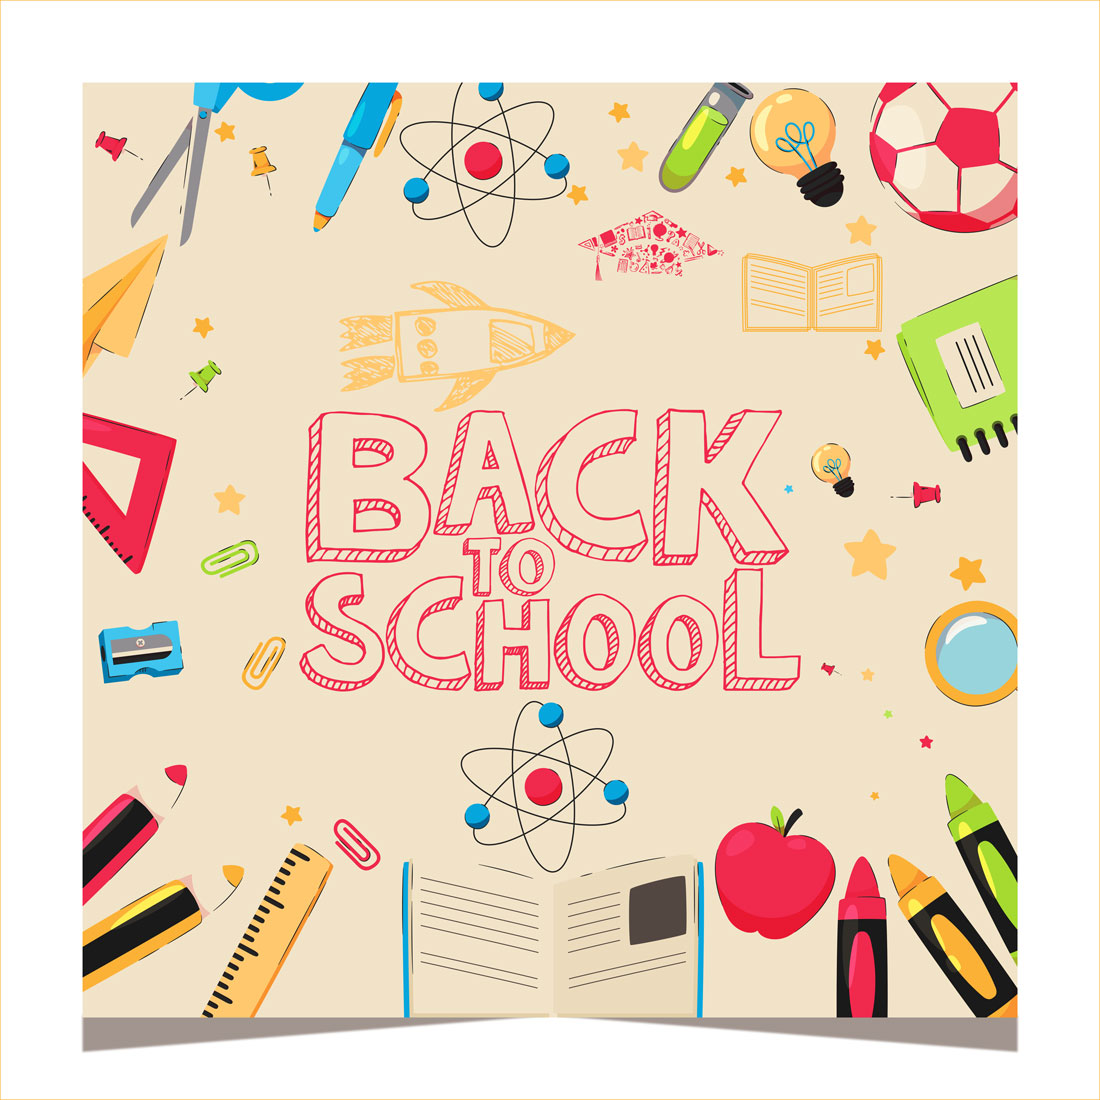 Back to school social media banner design template cover image.